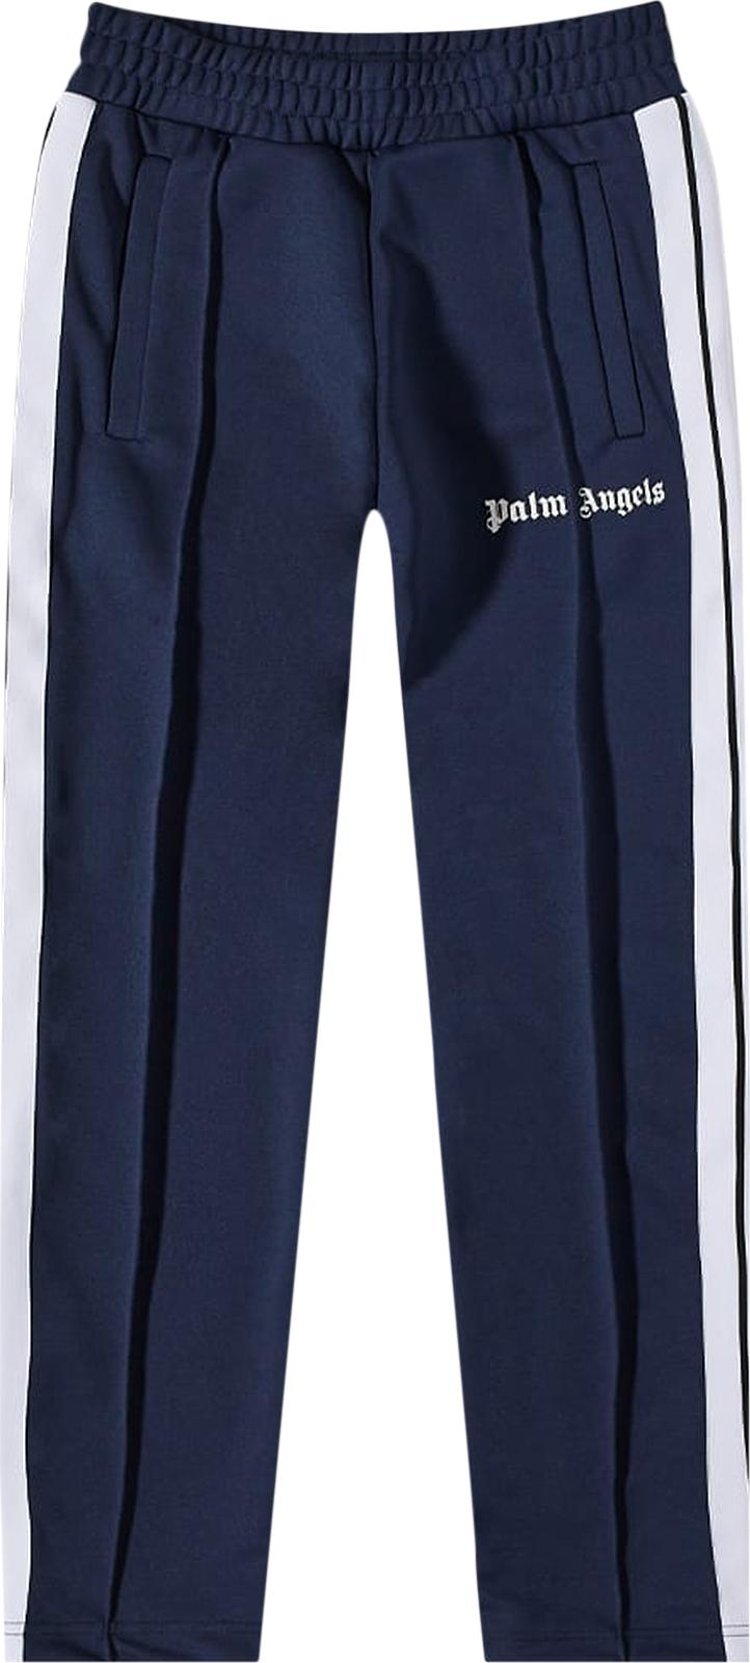 Palm Angels Palm Angels Classic Tracksuit Pants Navy Blue